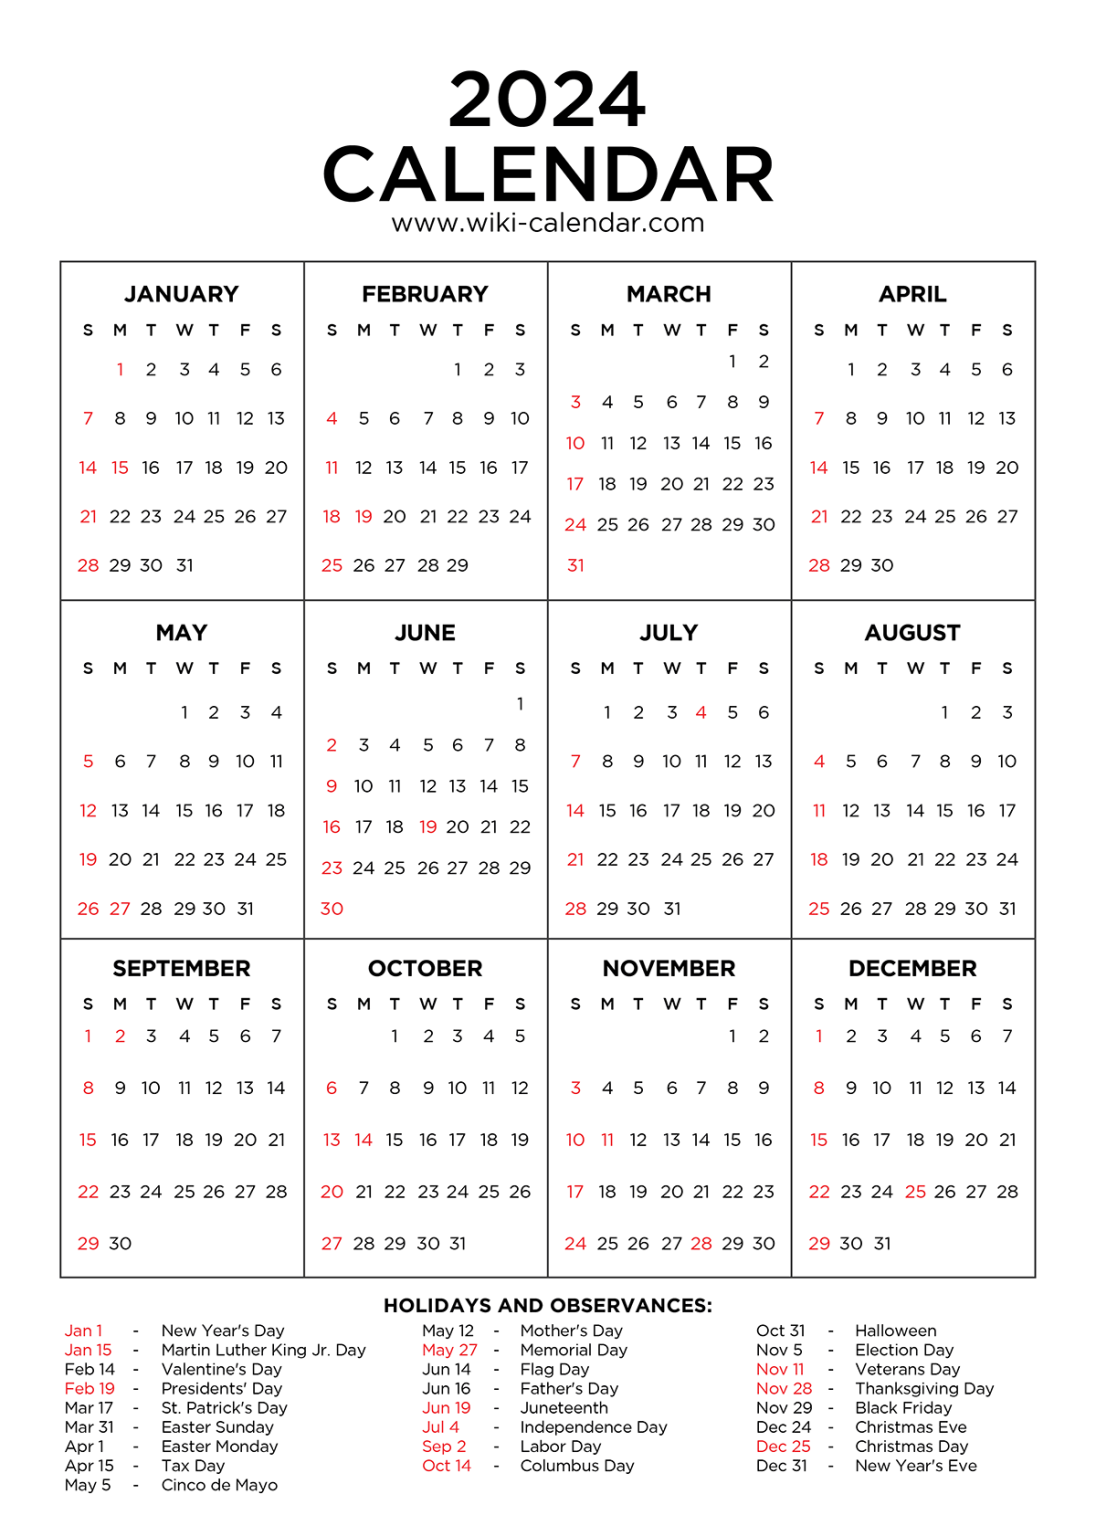 Year 2024 Calendar Printable With Holidays Wiki Calendar - Free Printable 2024 Yearly Calendar With Holidays